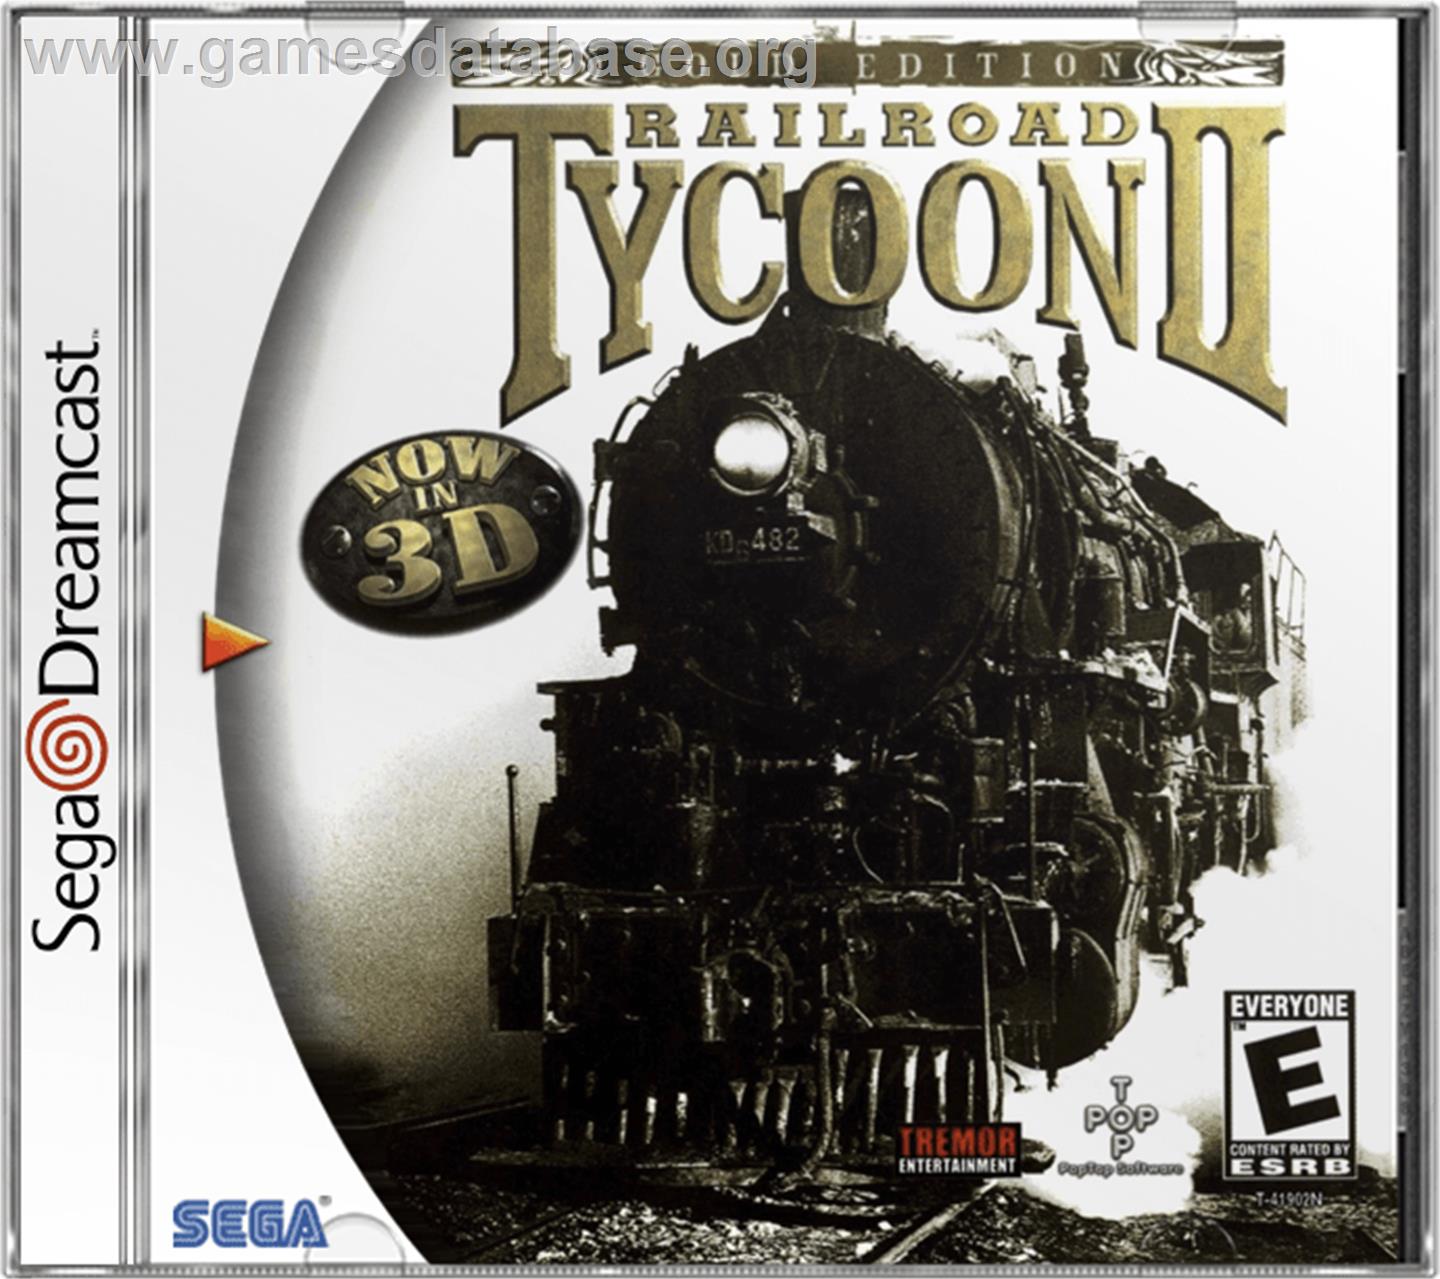 Railroad Tycoon II (Gold Edition) - Sega Dreamcast - Artwork - Box